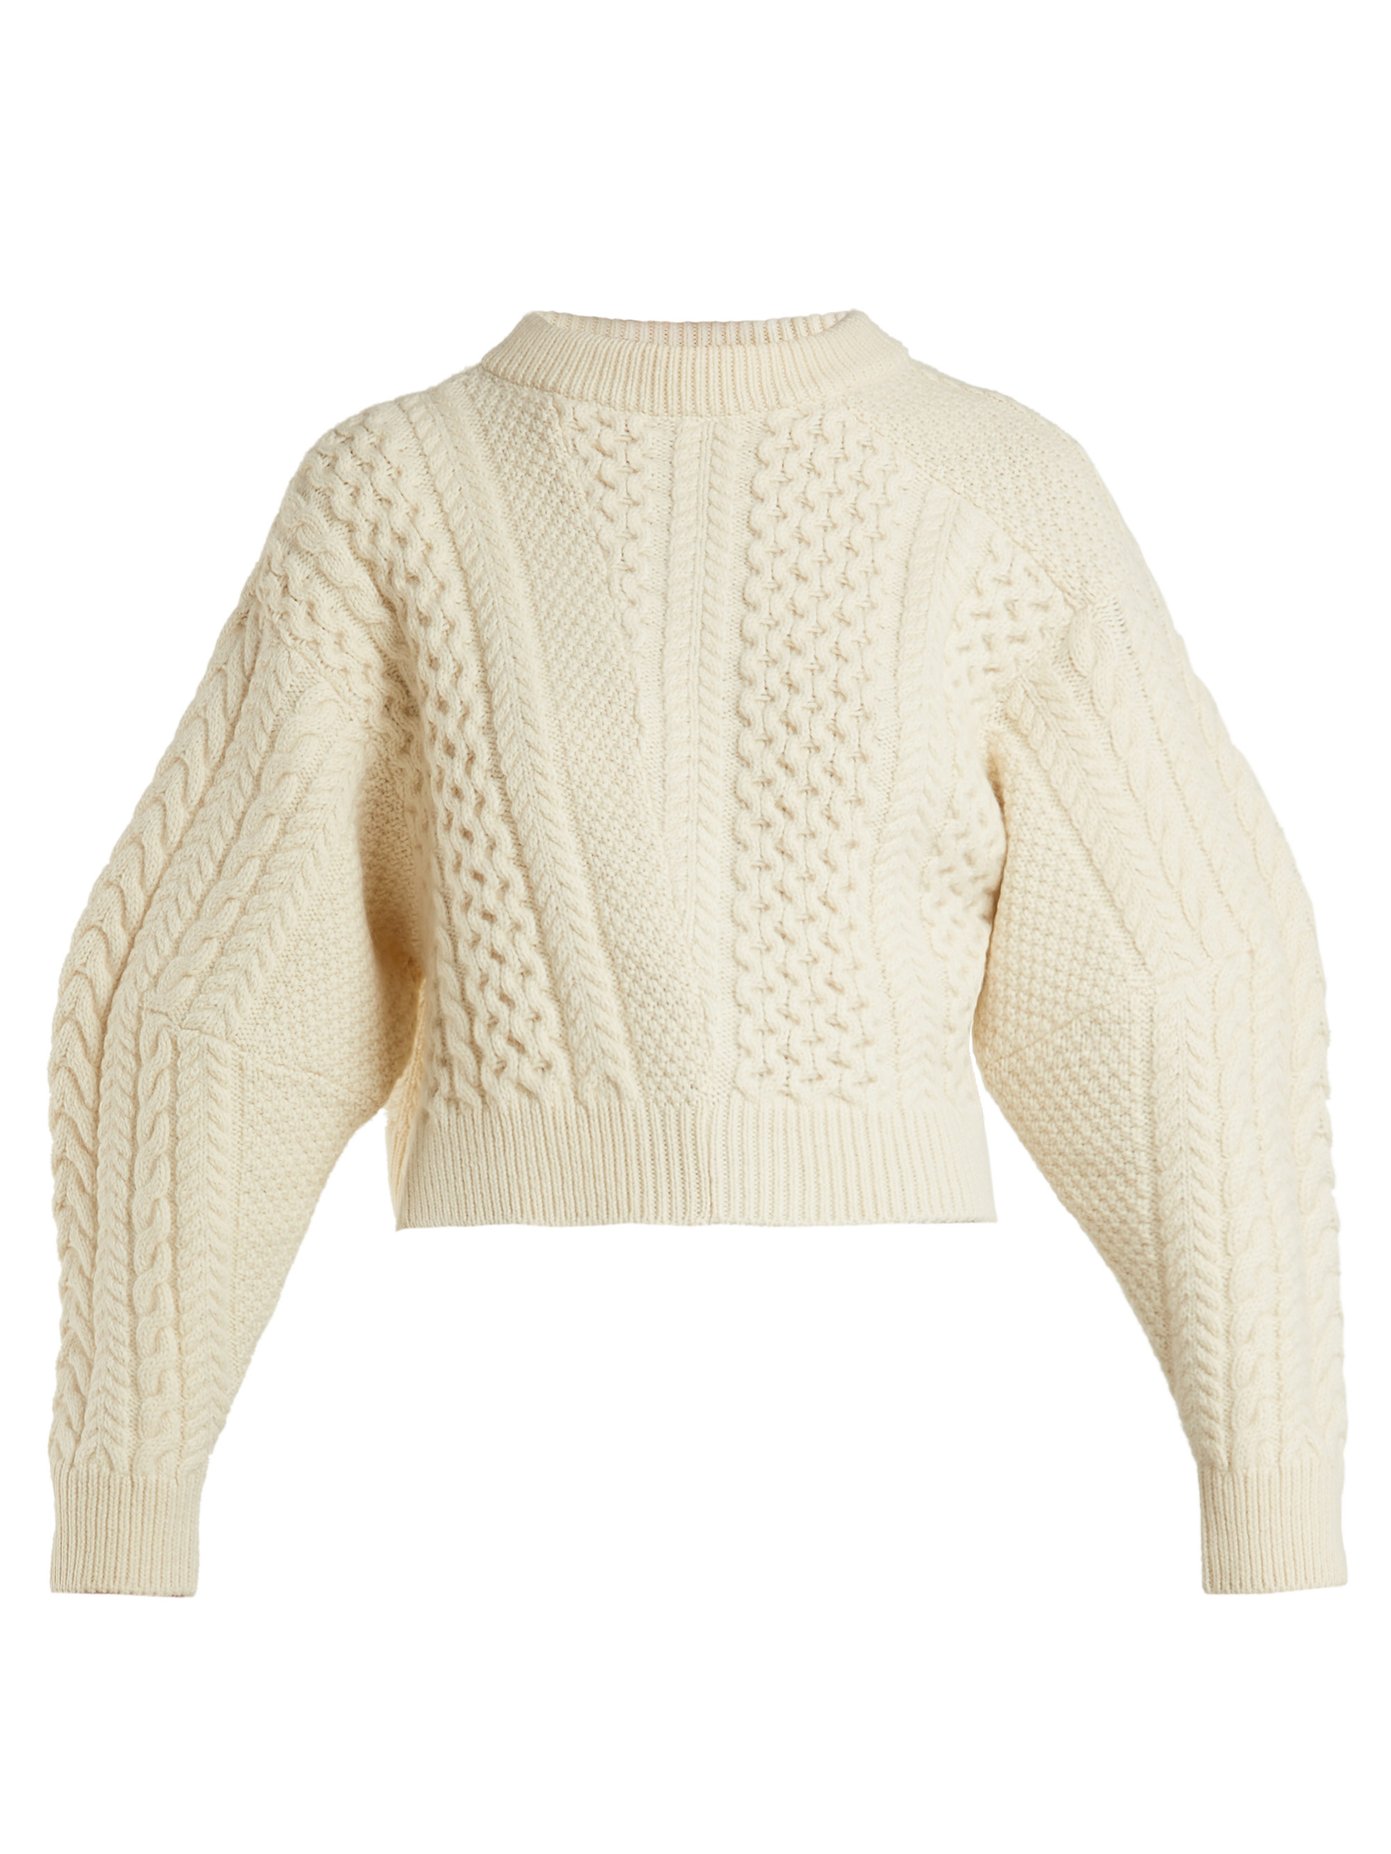 stella mccartney sweater